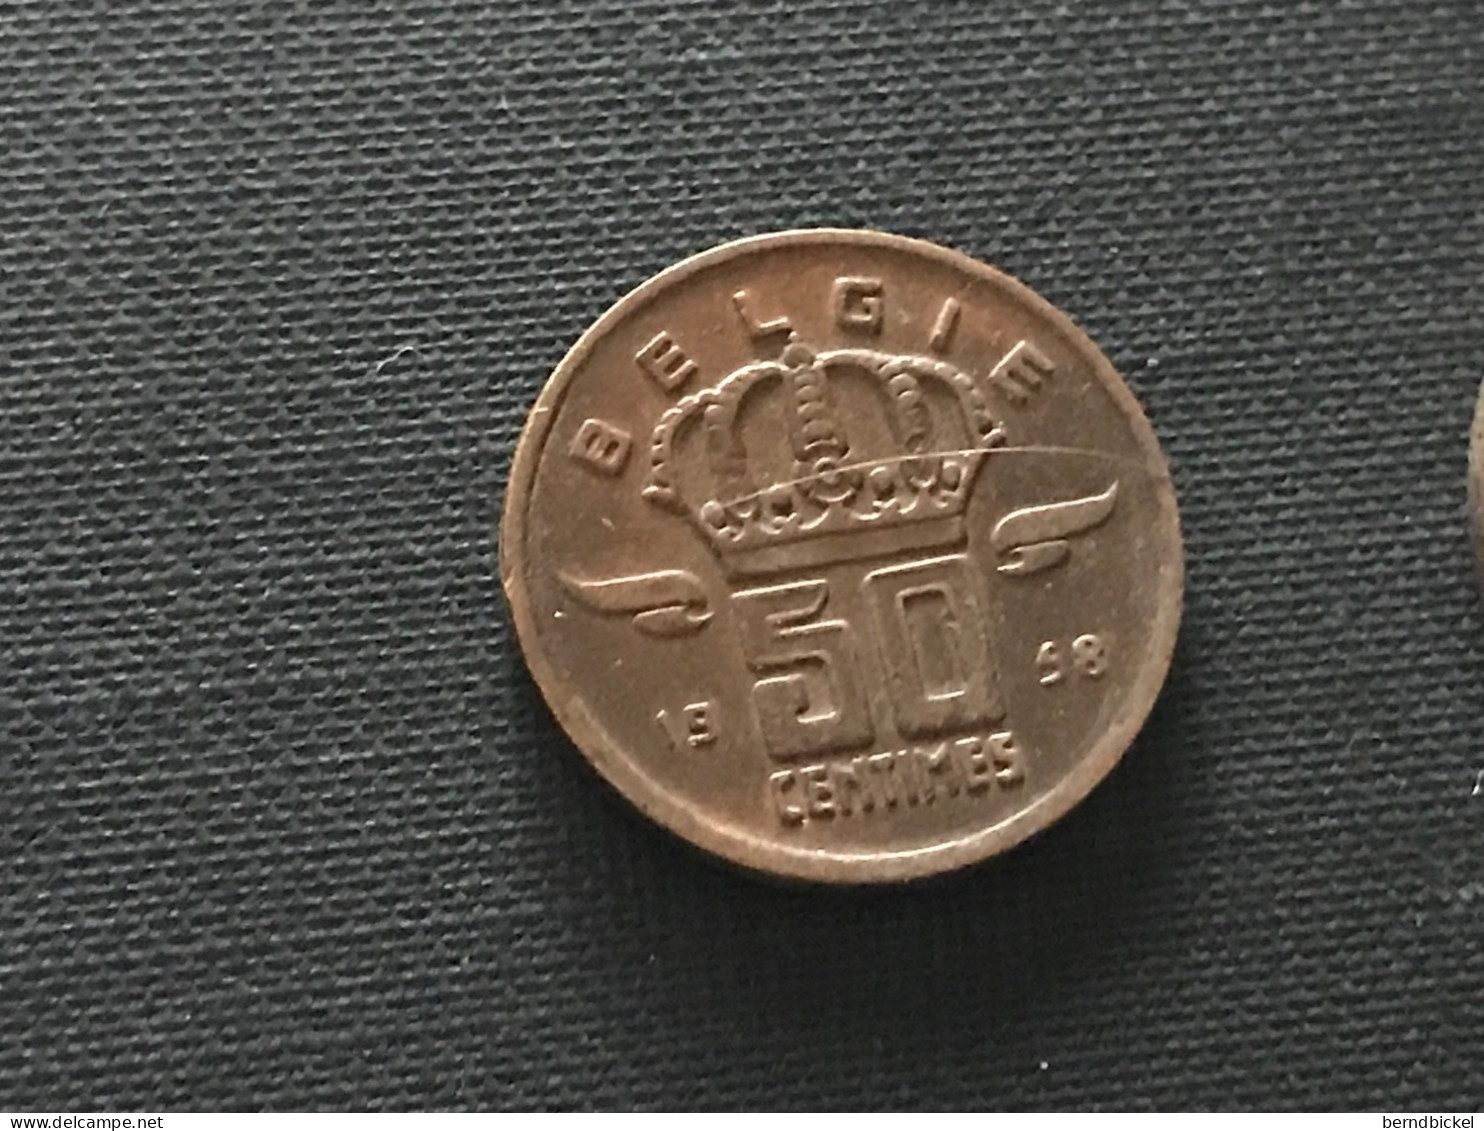 Münze Münzen Umlaufmünze Belgien 50 Cent 1958 Belgie - 50 Cents